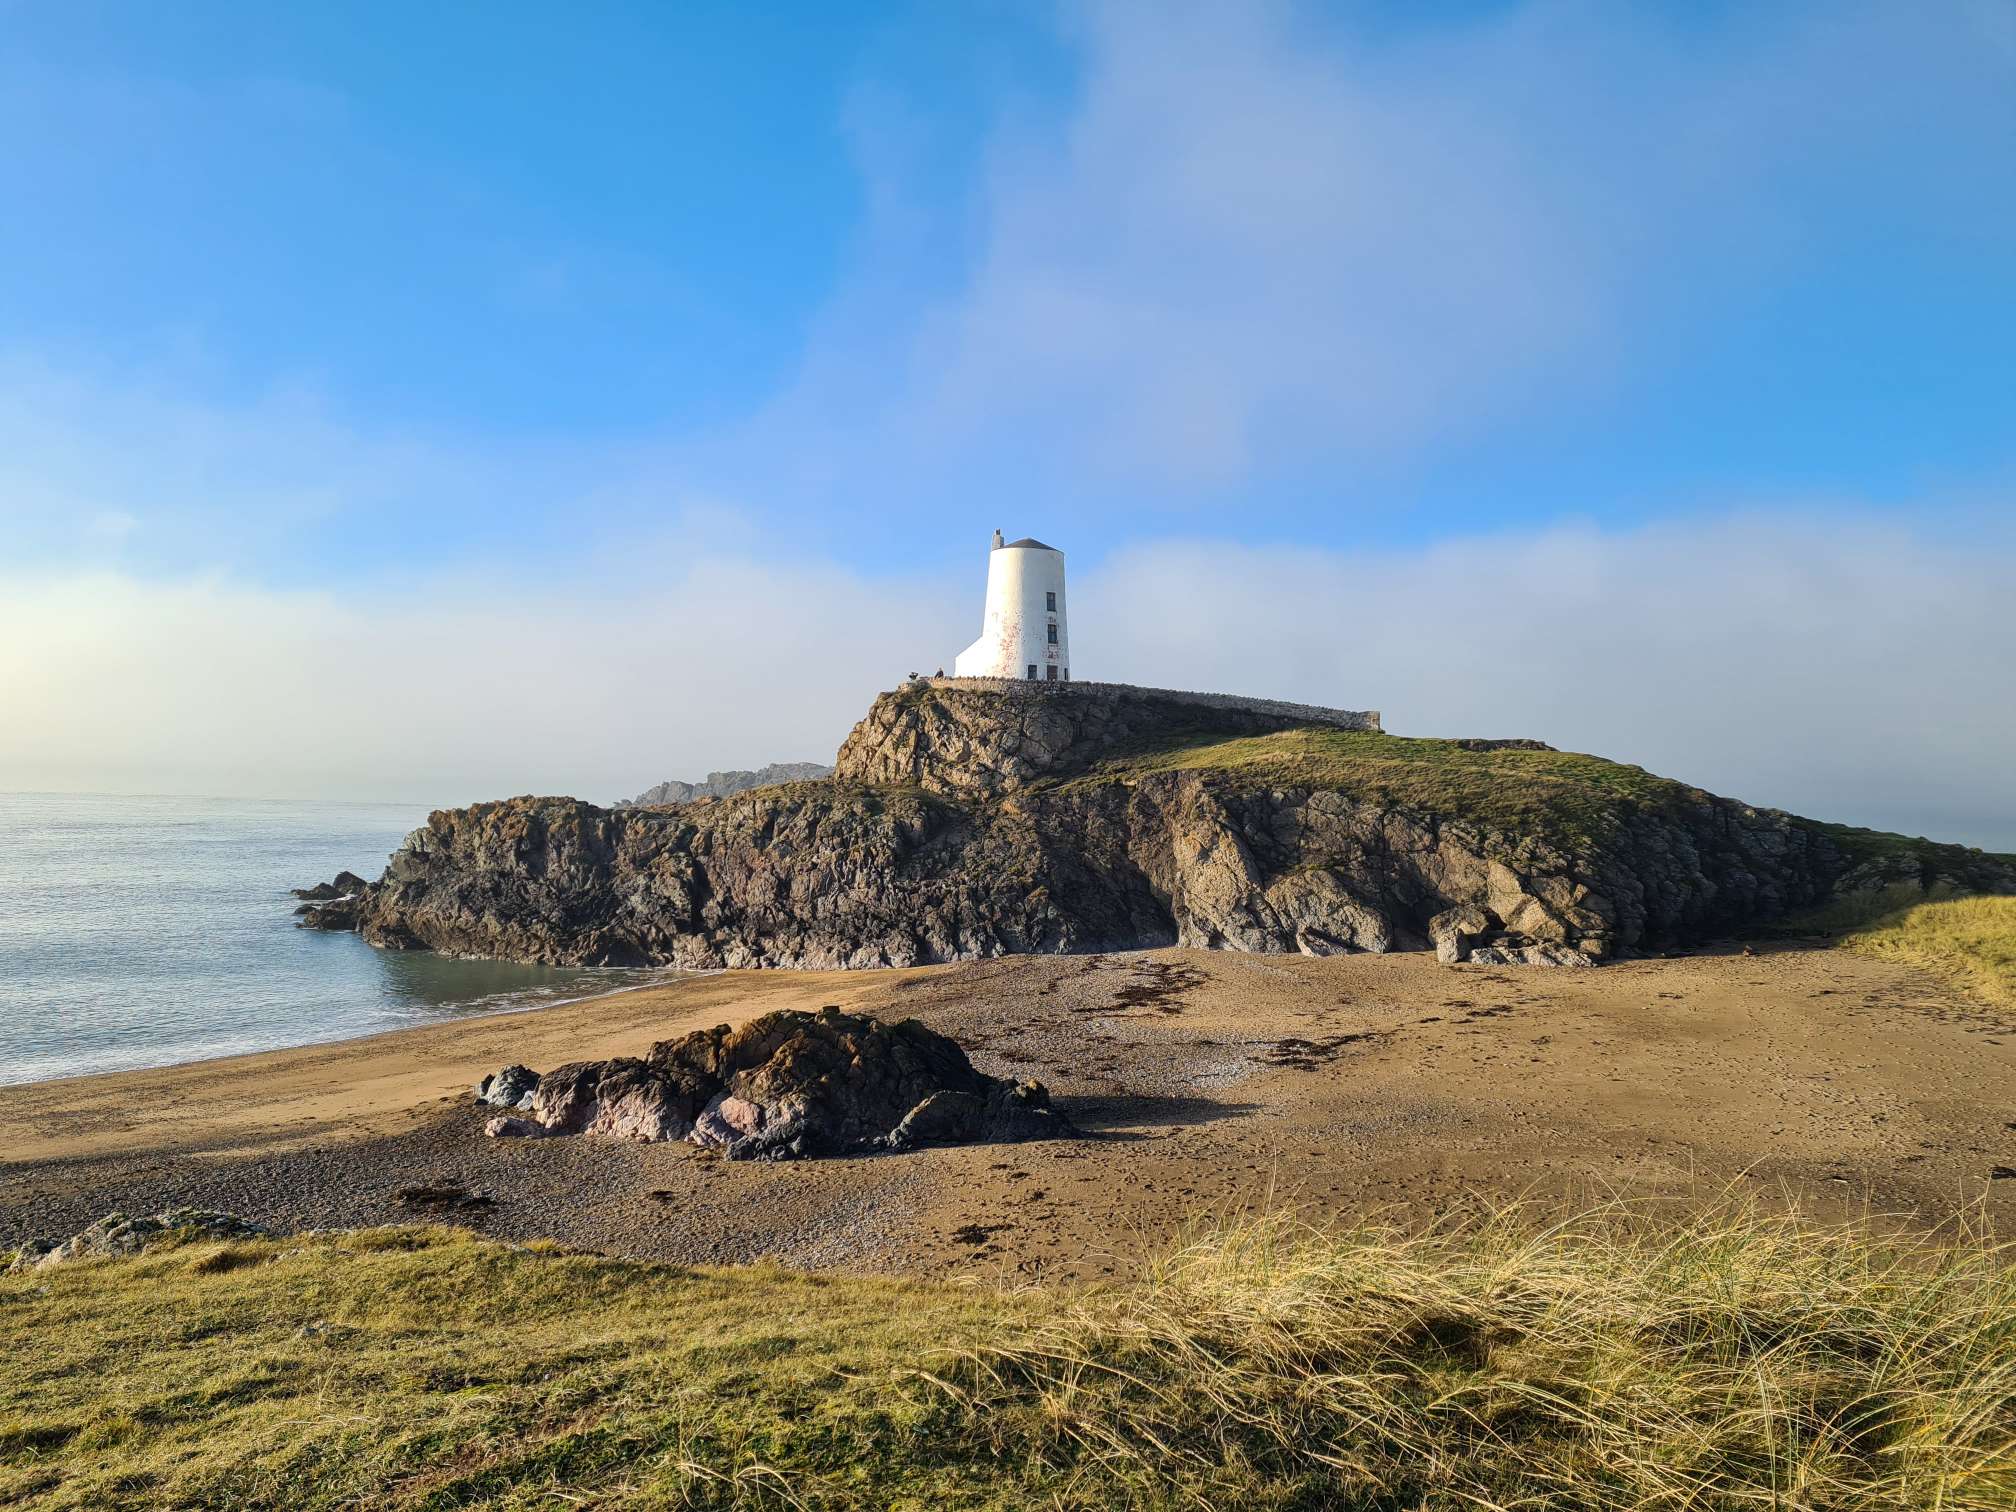 Llanddwyn Island Light house from the beach